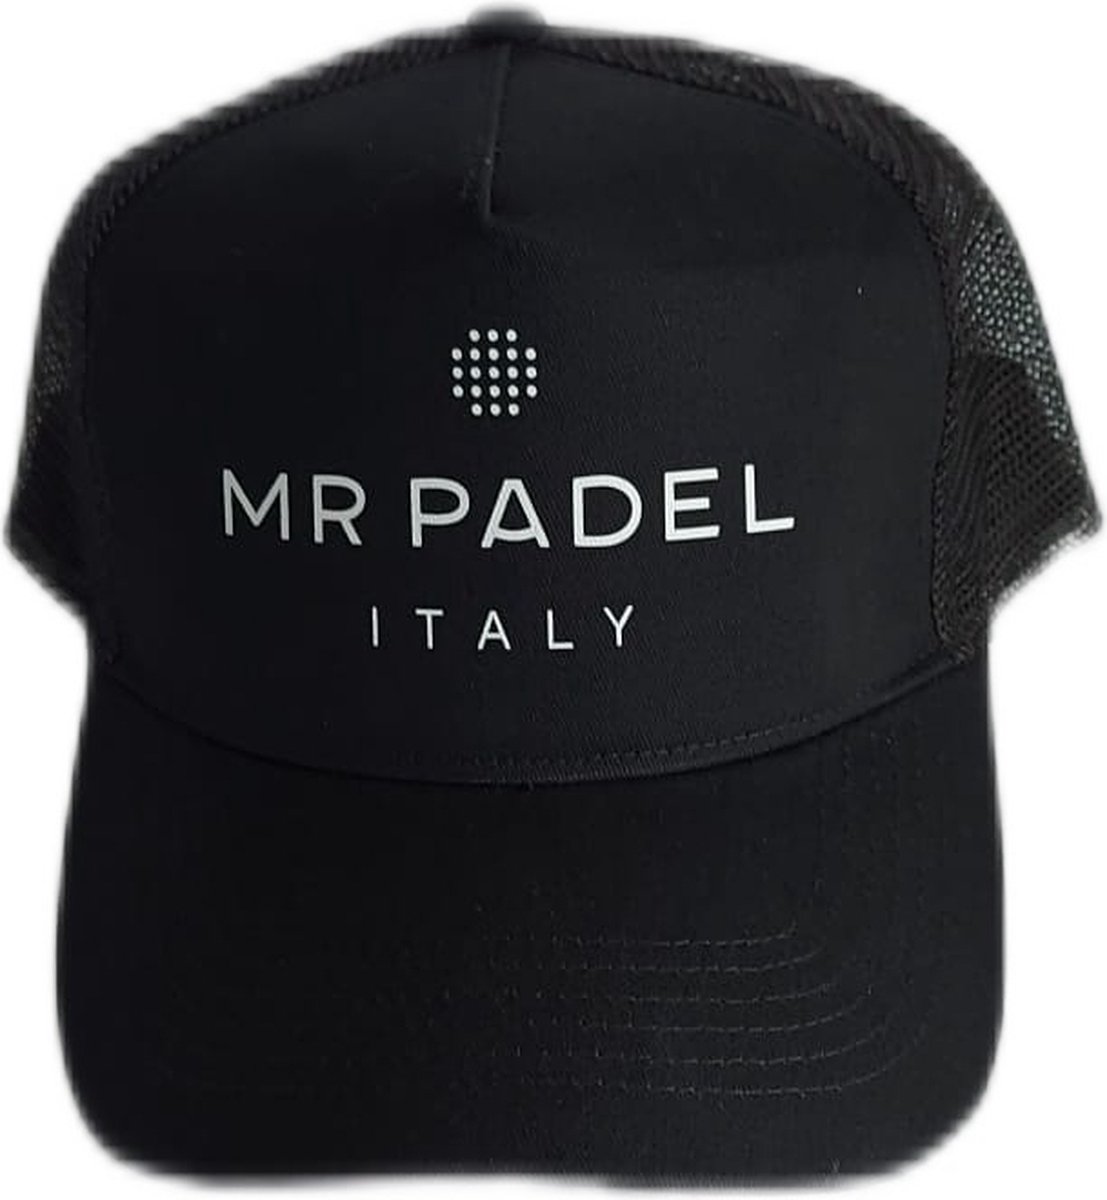 Mr Padel Italy - Black Cap / Pet - One Sizes